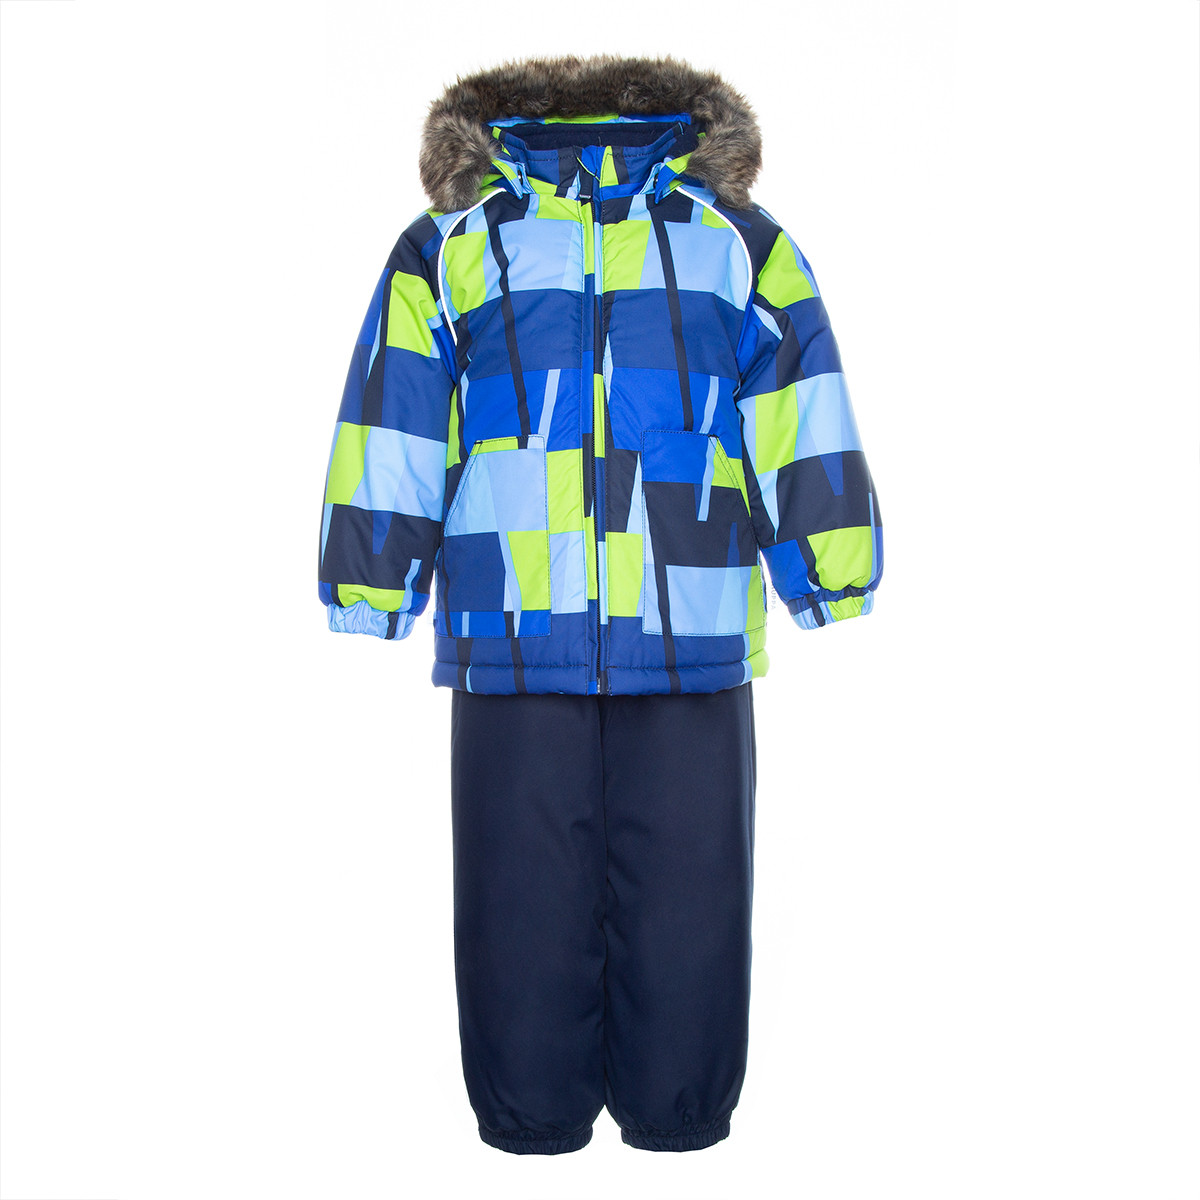 Зимний термо костюм размеры 74, 86 для мальчика 9, 18 мес. AVERY ТМ HUPPA 41780030-92735